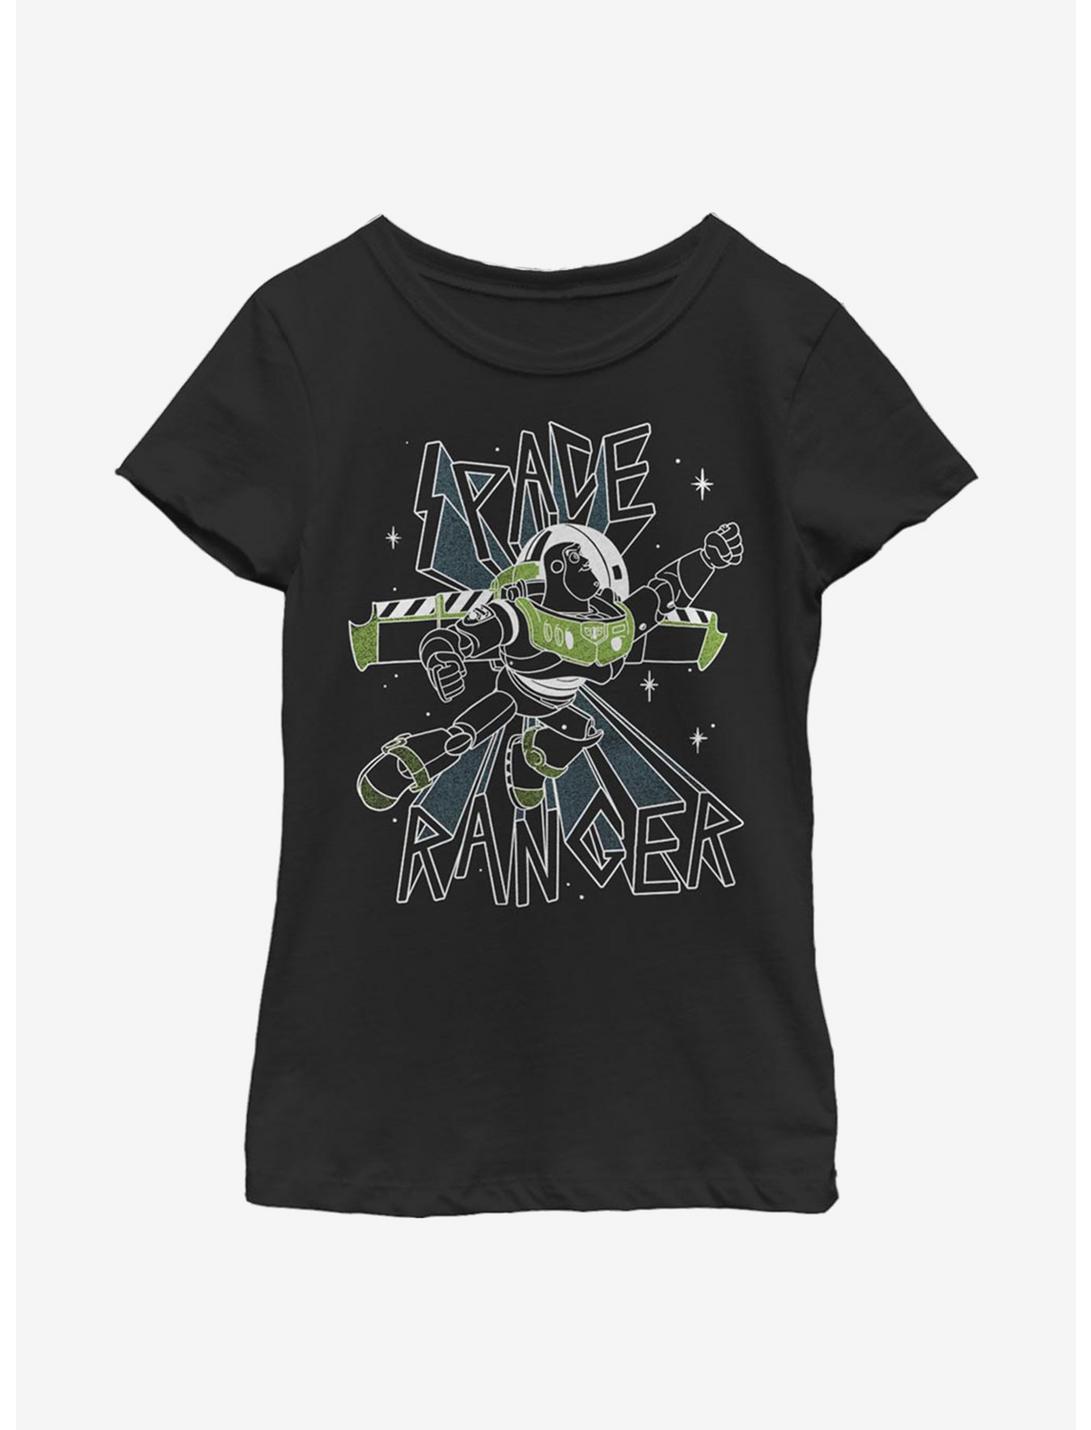 Disney Pixar Toy Story The Ranger B Youth Girls T-Shirt, BLACK, hi-res